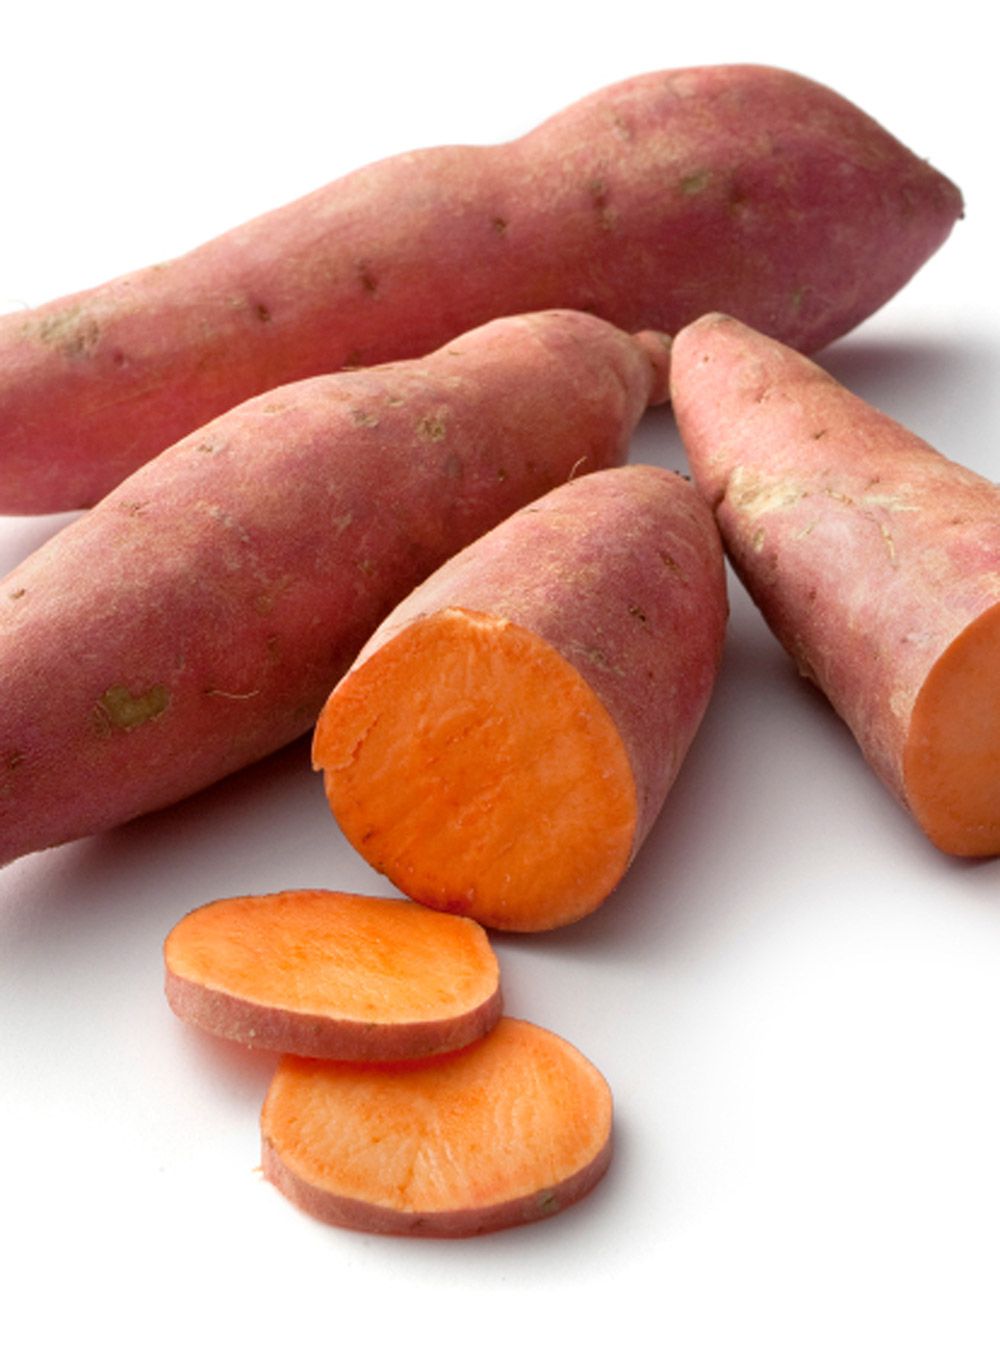 sweet potato resistant starch